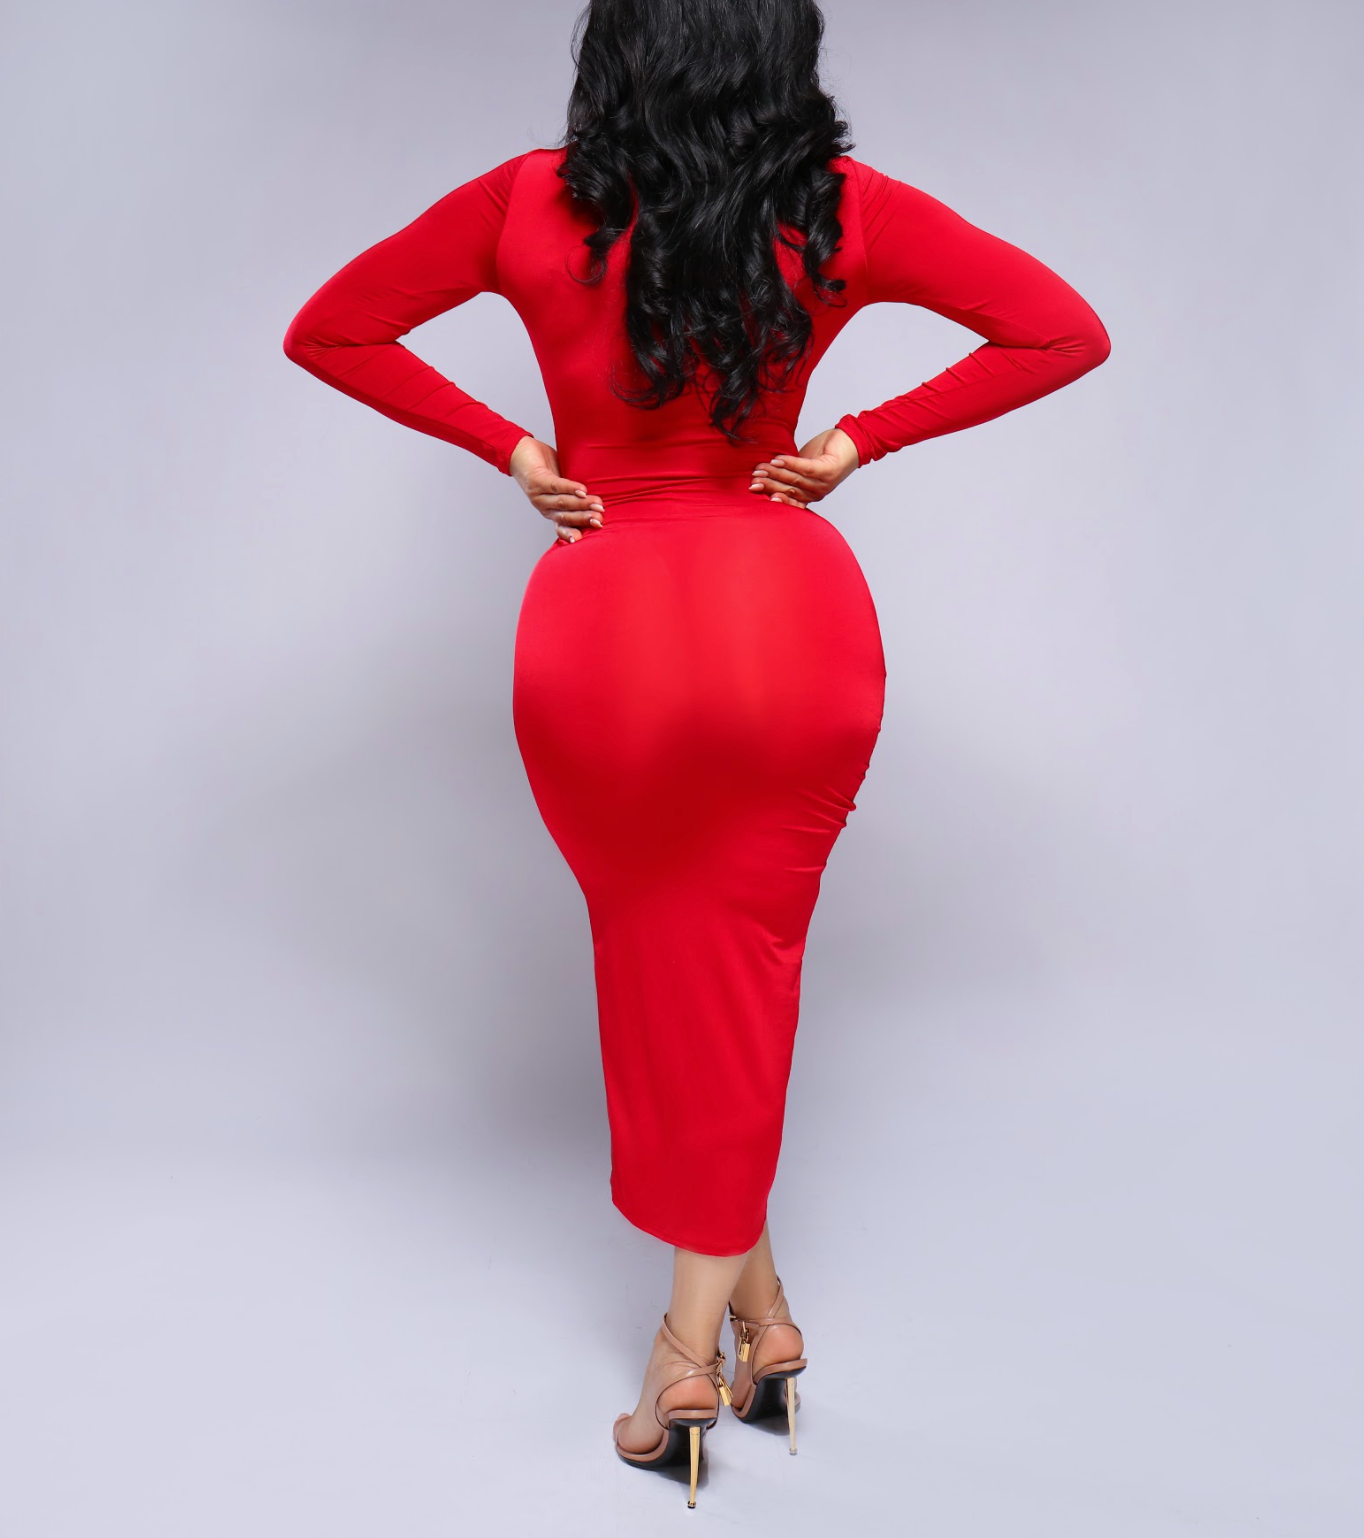 B.Badazz™️ “Lady in Red” Dress